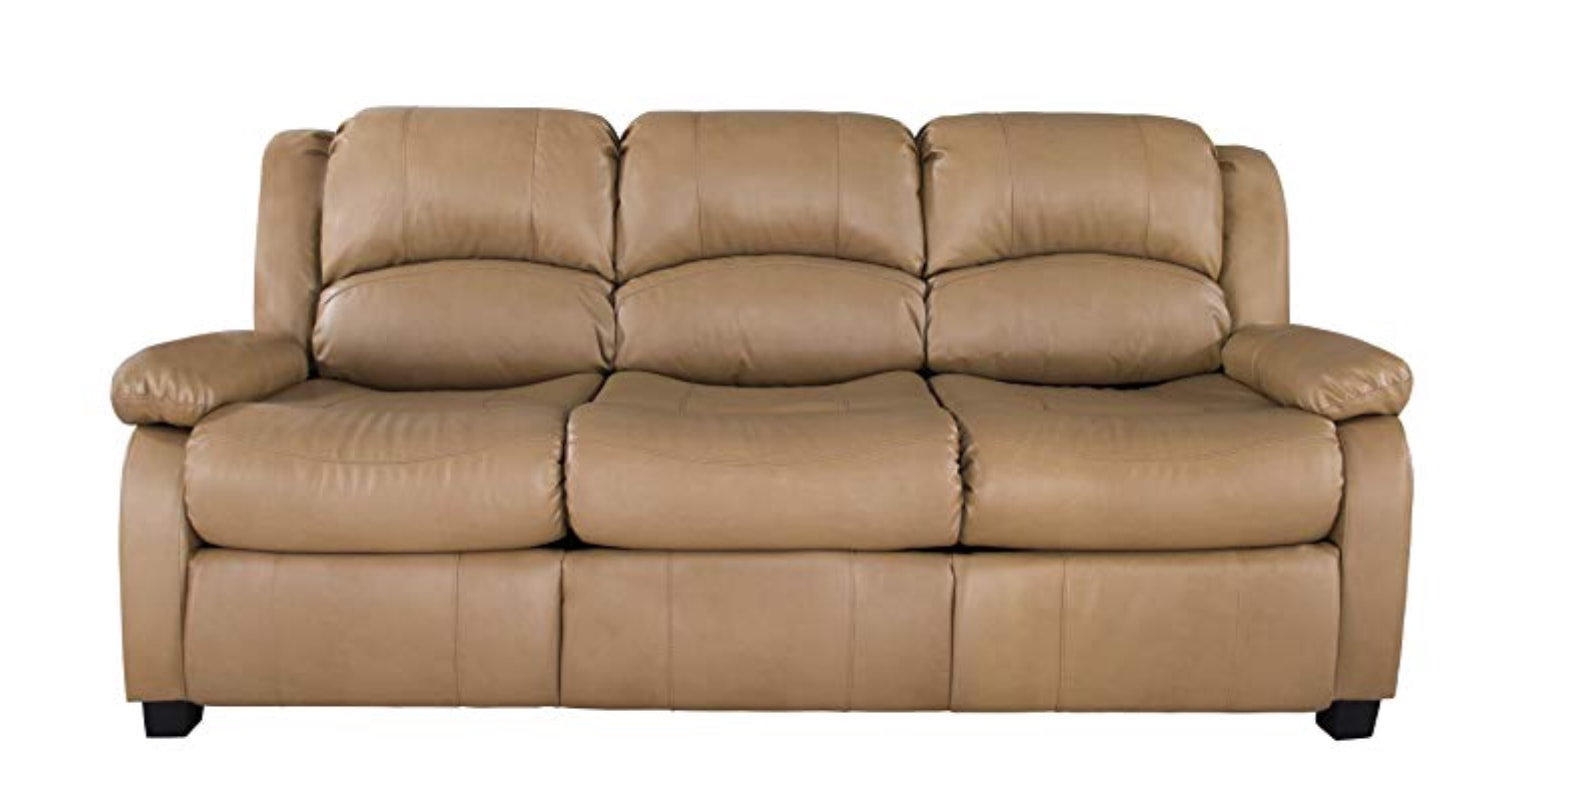 65 rv sleeper sofa w hide a bed